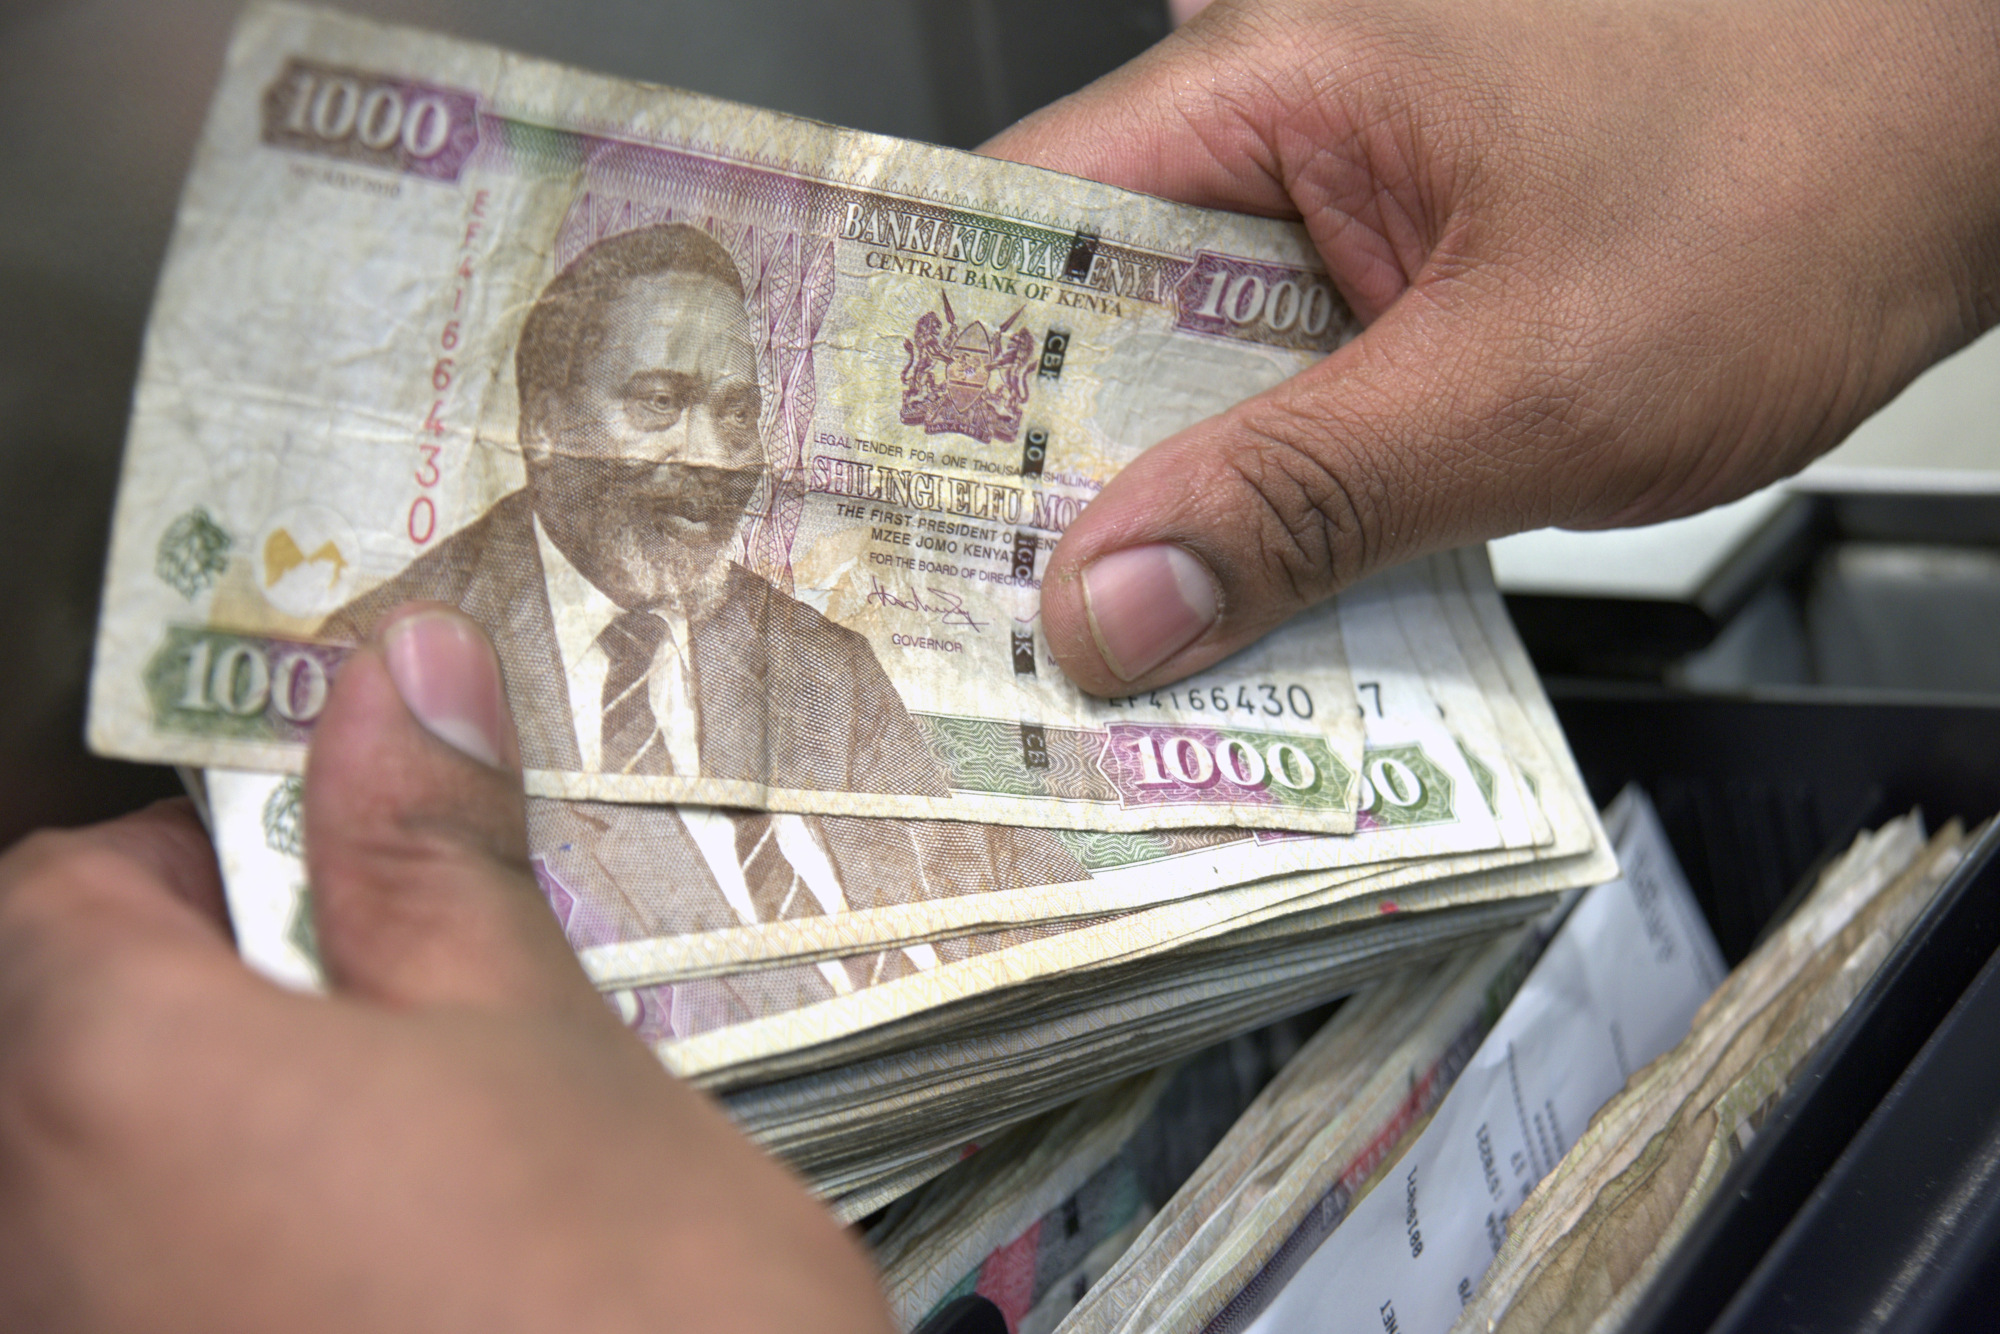 An employee holds Kenyan 1000 shilling currency notes at a cash desk inside a Nakumatt Holdings Ltd. supermarket in Nairobi, Kenya, on Saturday, Feb. 18, 2017. Nakumatt is Kenya's biggest supermarket chain.